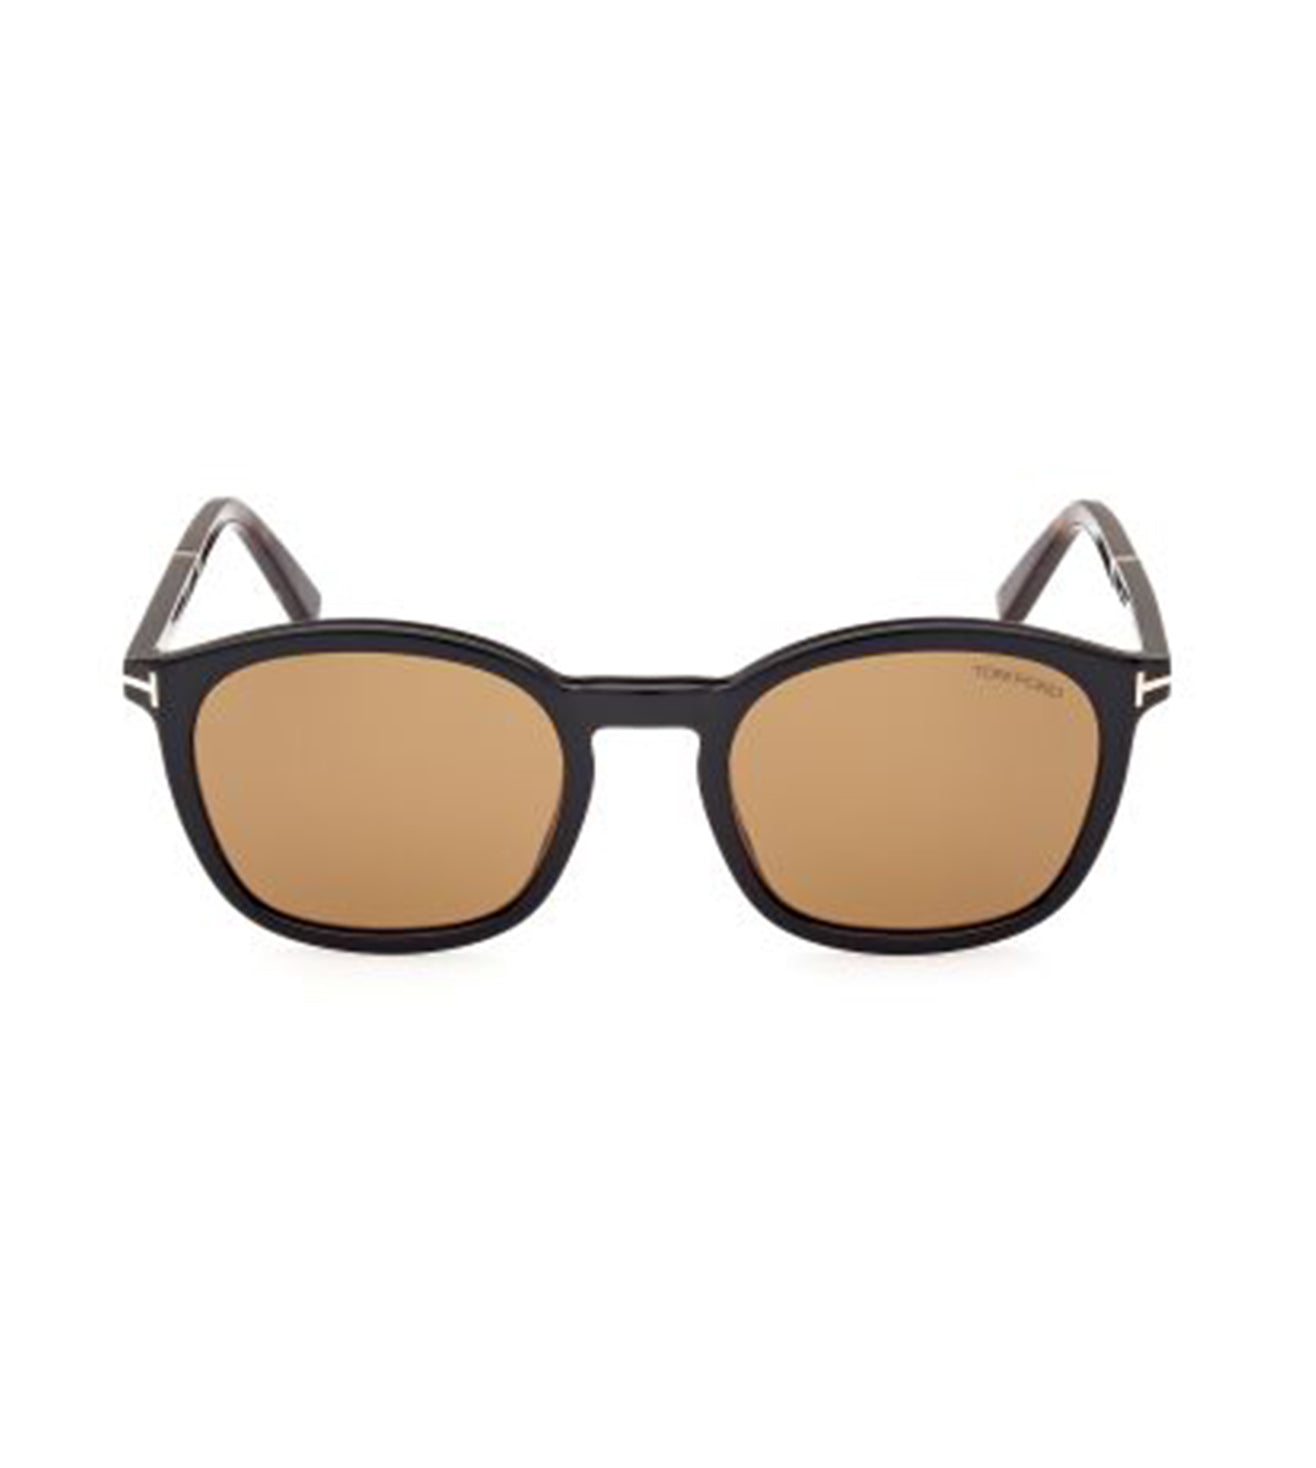 Tom Ford Jayson Men's Brown Square Sunglasses